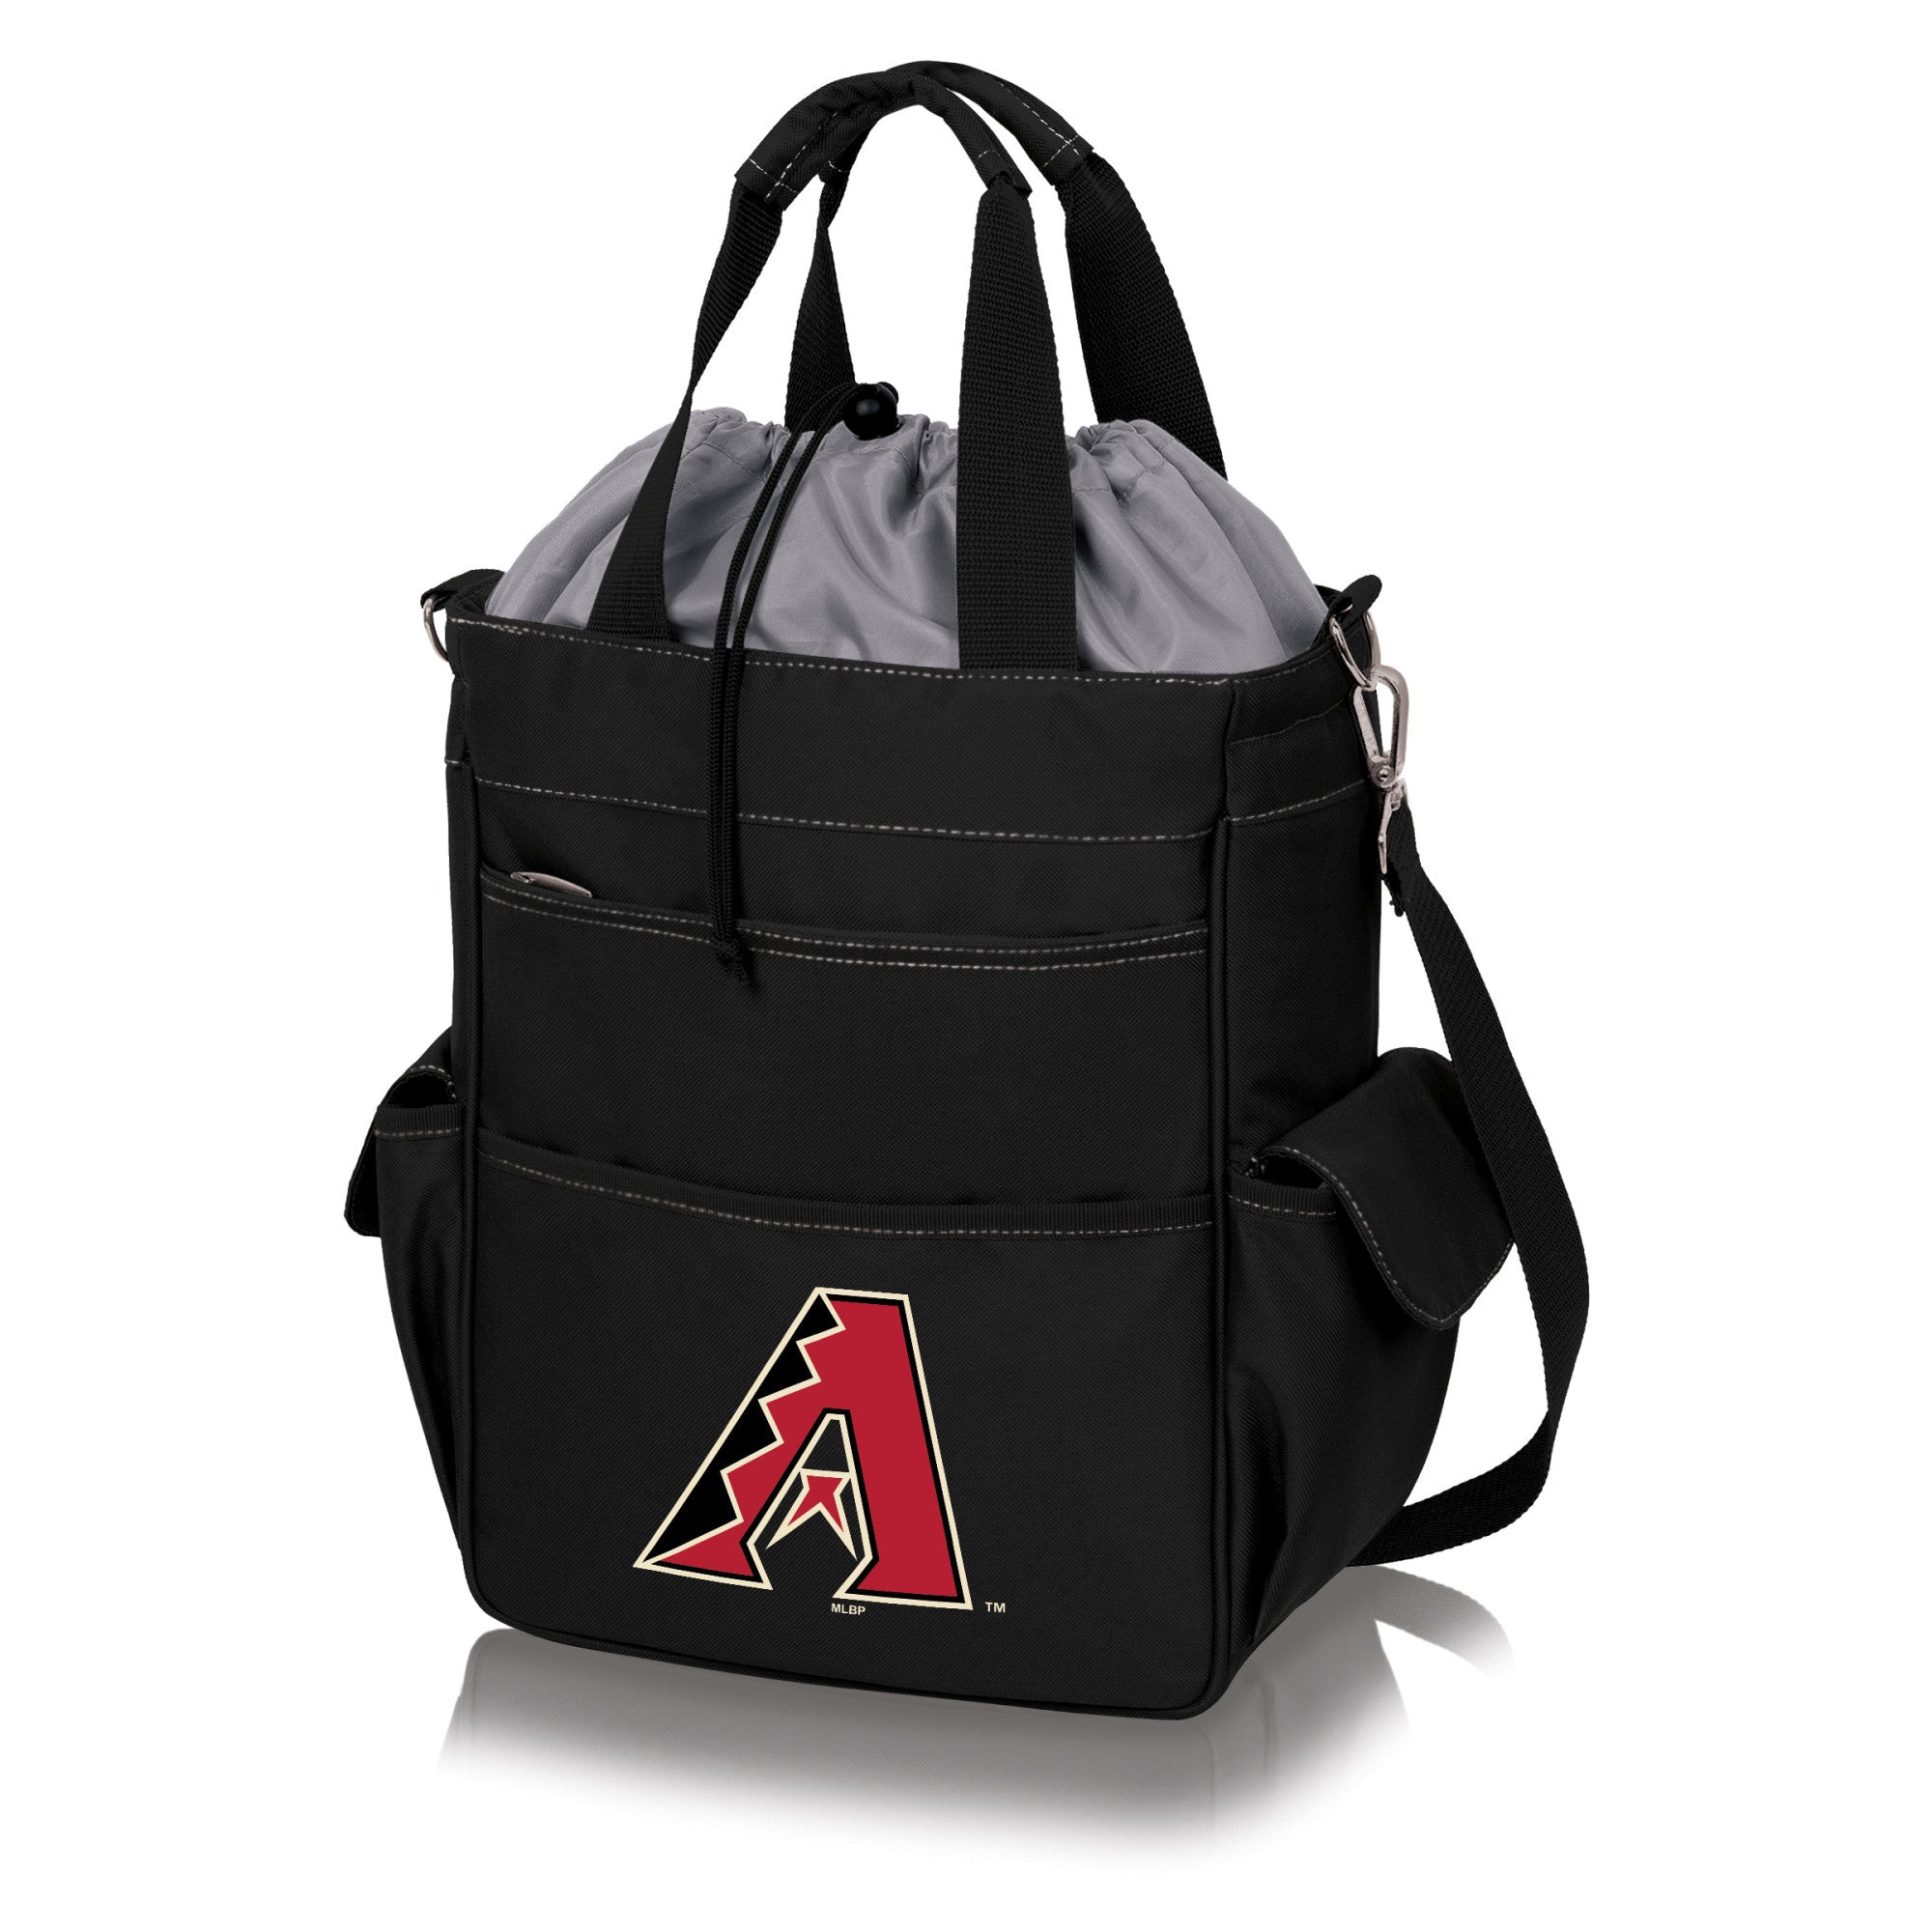 Arizona Diamondbacks - Activo Cooler Tote Bag, (Black with Gray 